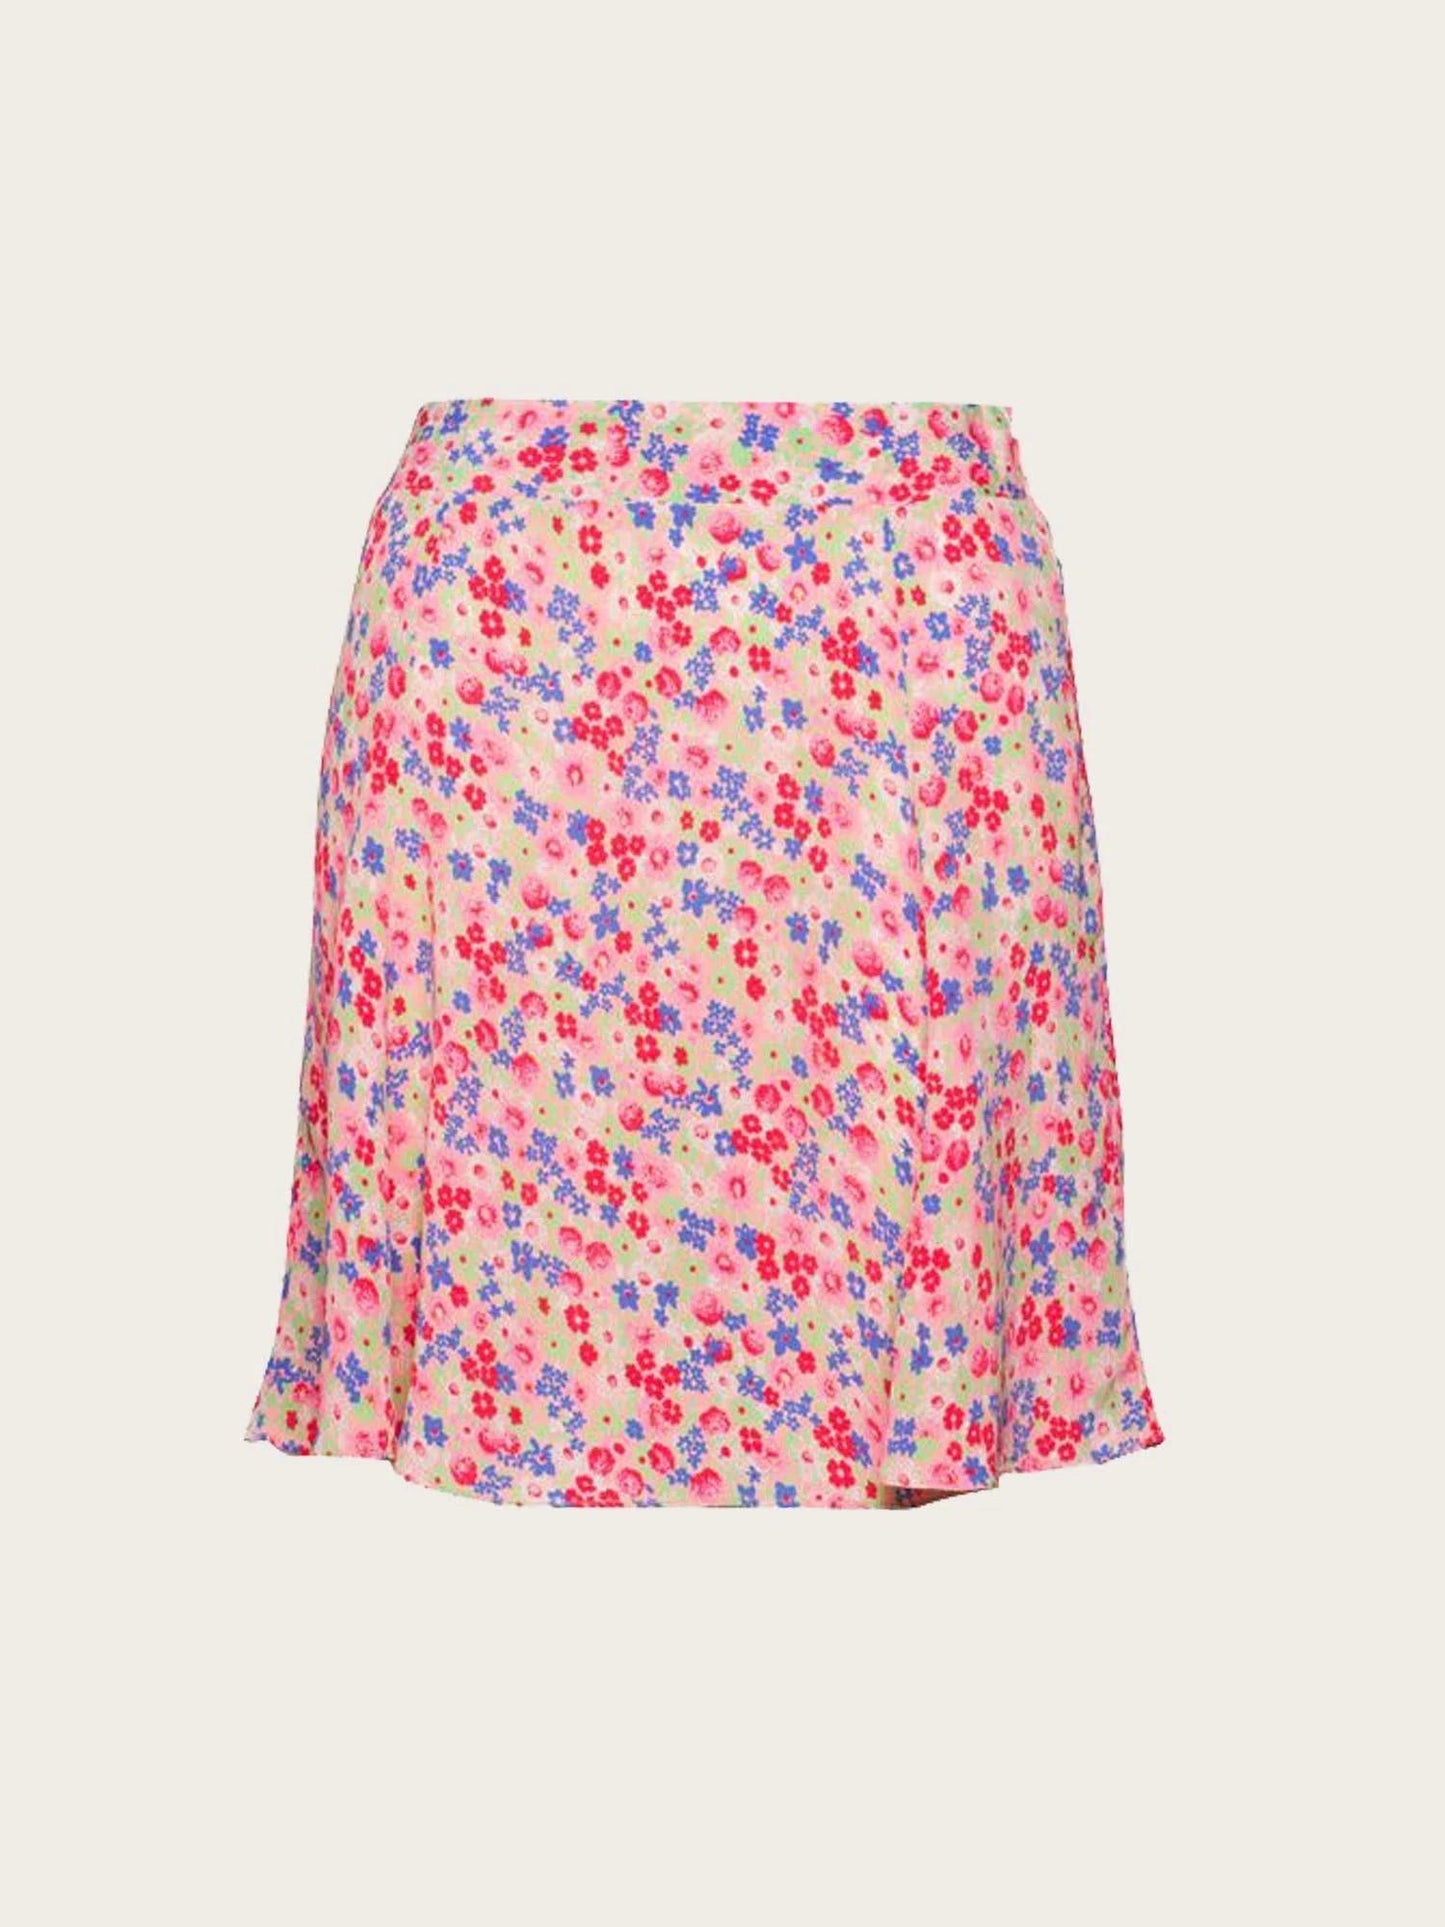 Skirt Blooming - No22 Damplassen